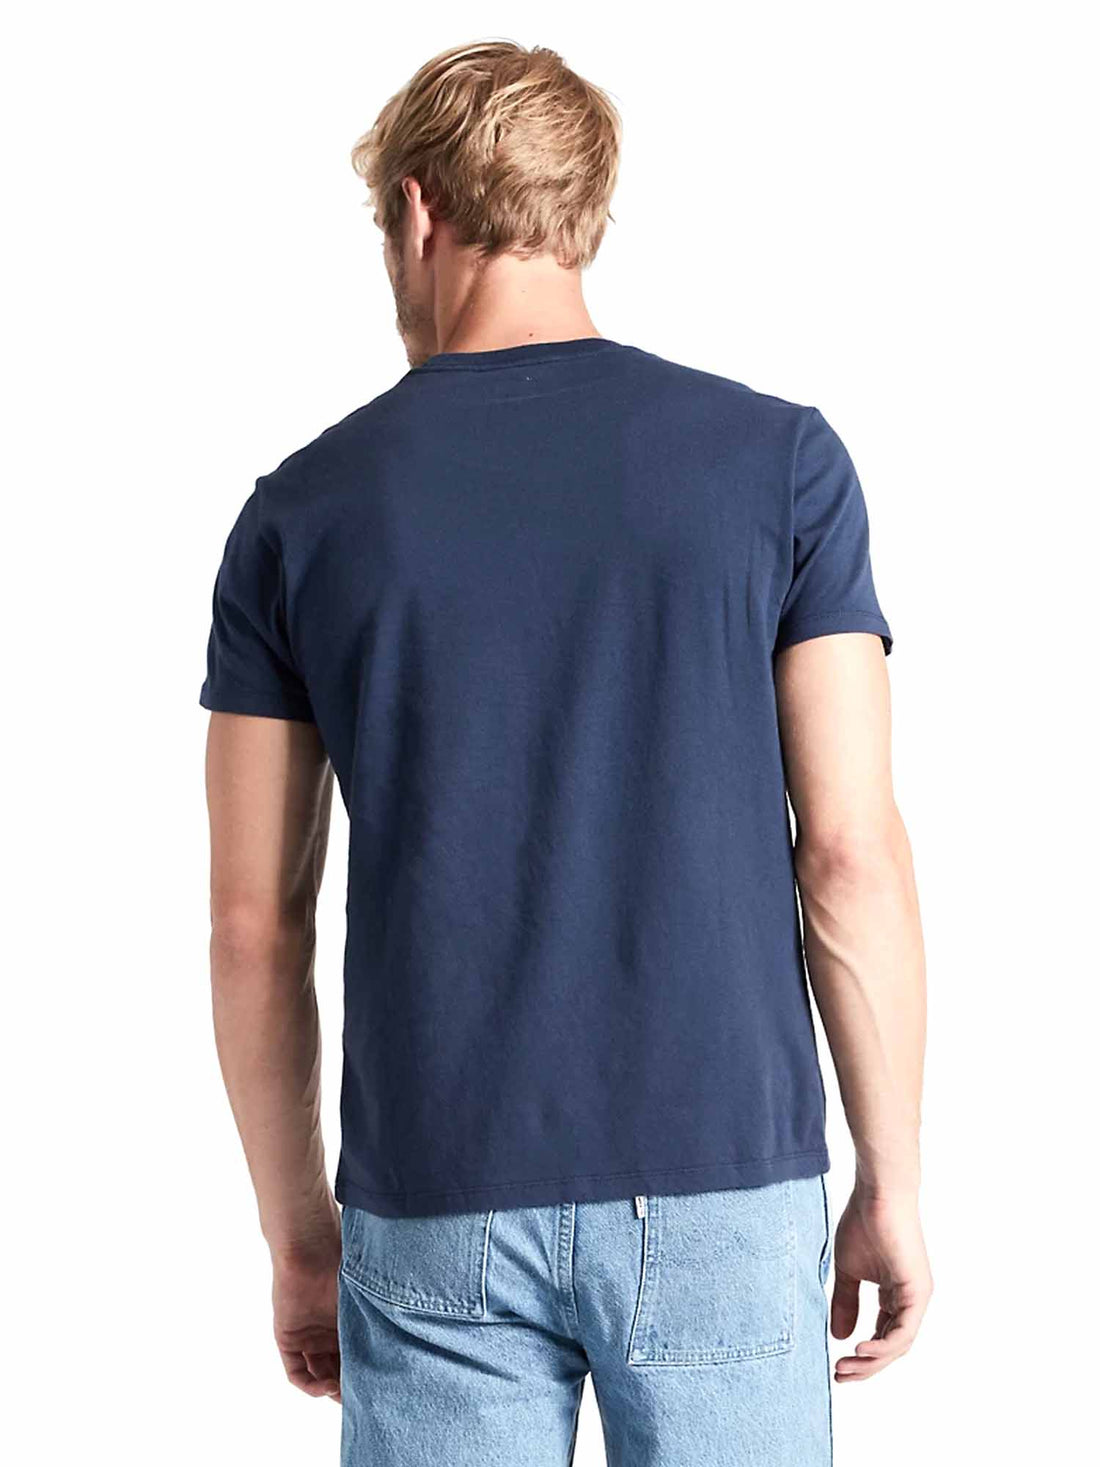 T-shirt Blu Levi's